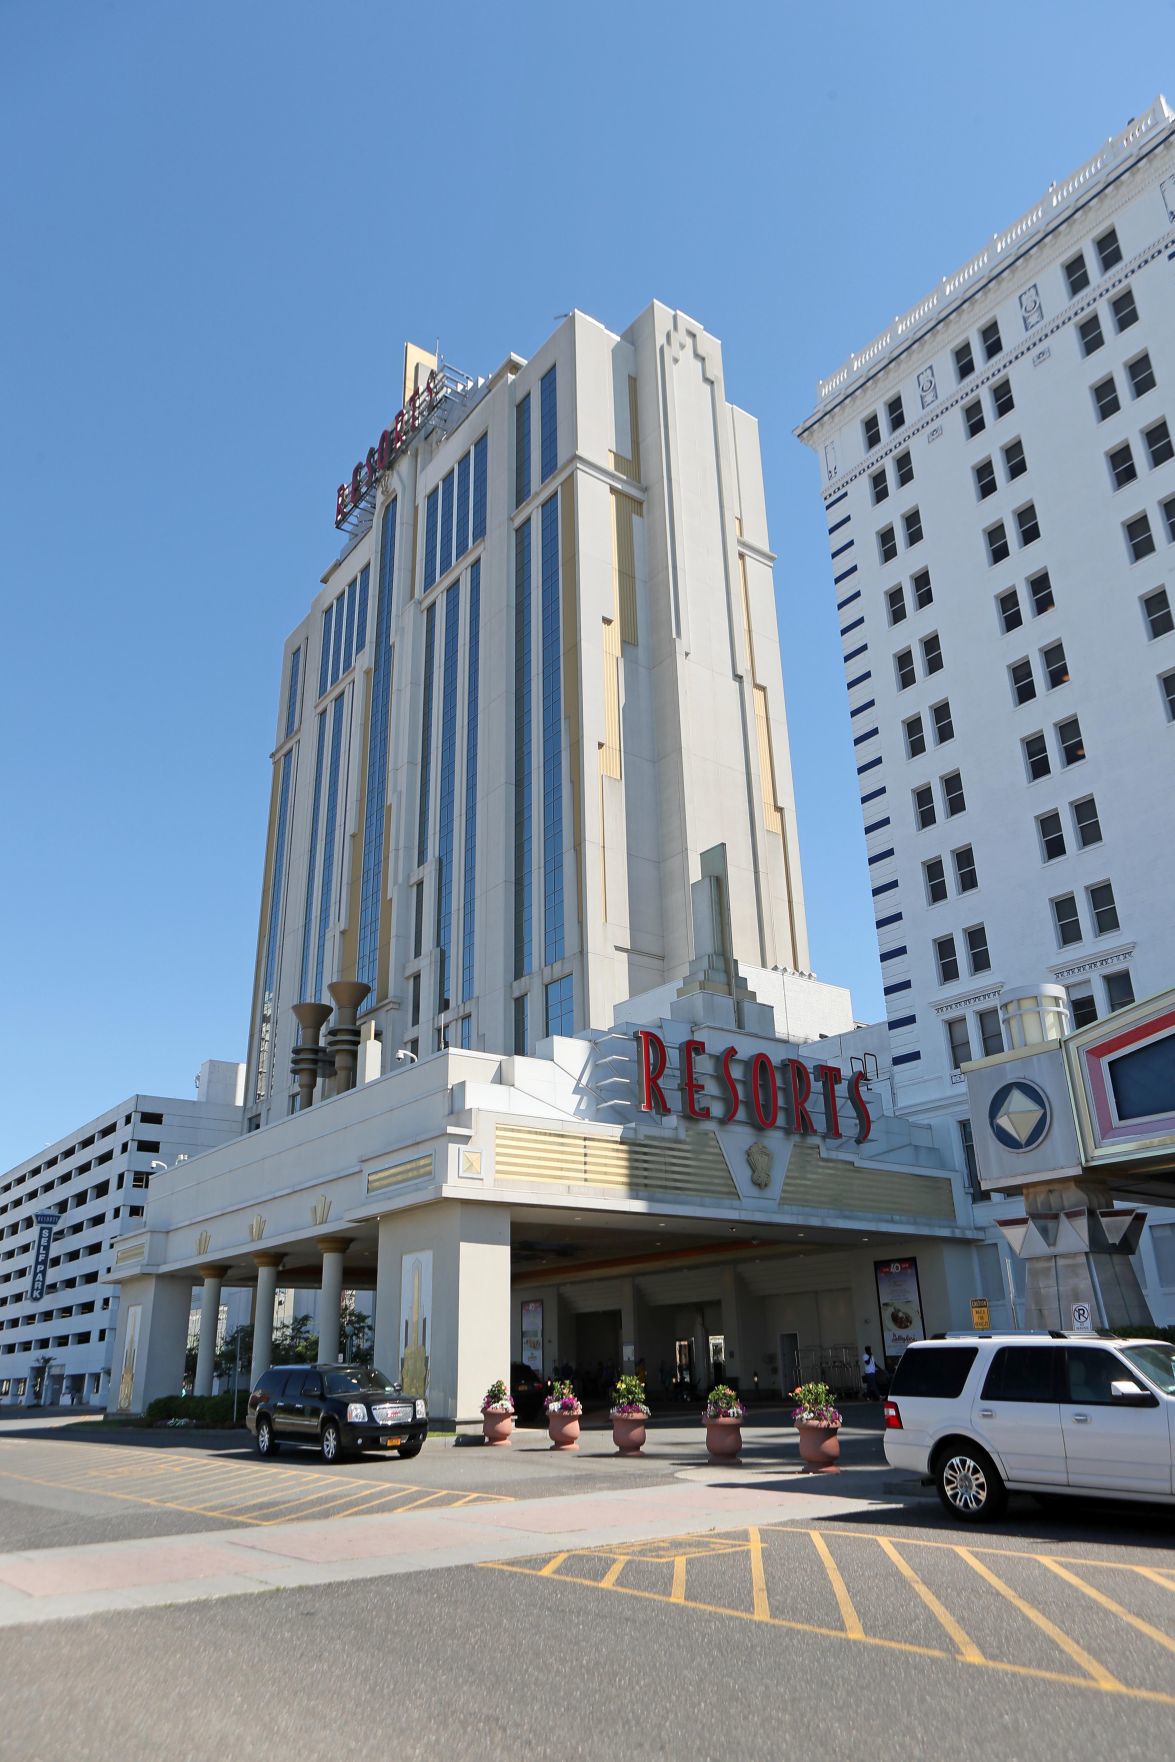 resorts hotel and casino in atlantic citynj